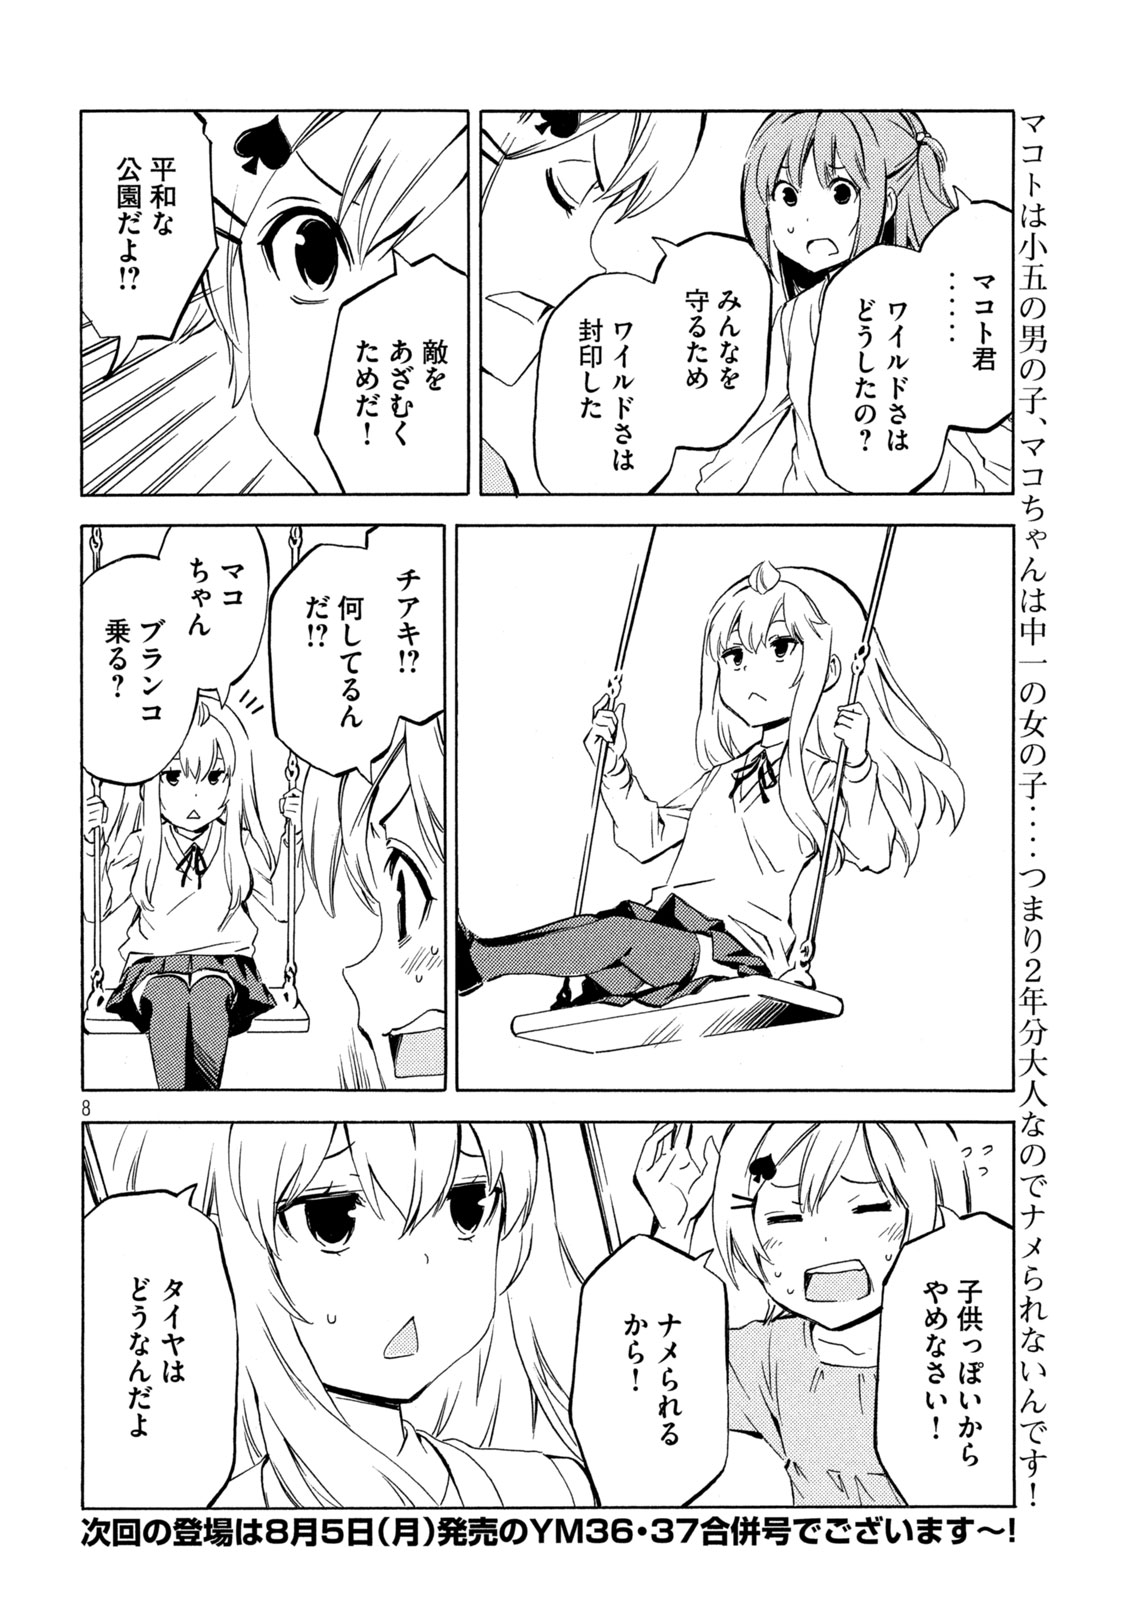 Minami-ke - Chapter 488 - Page 8